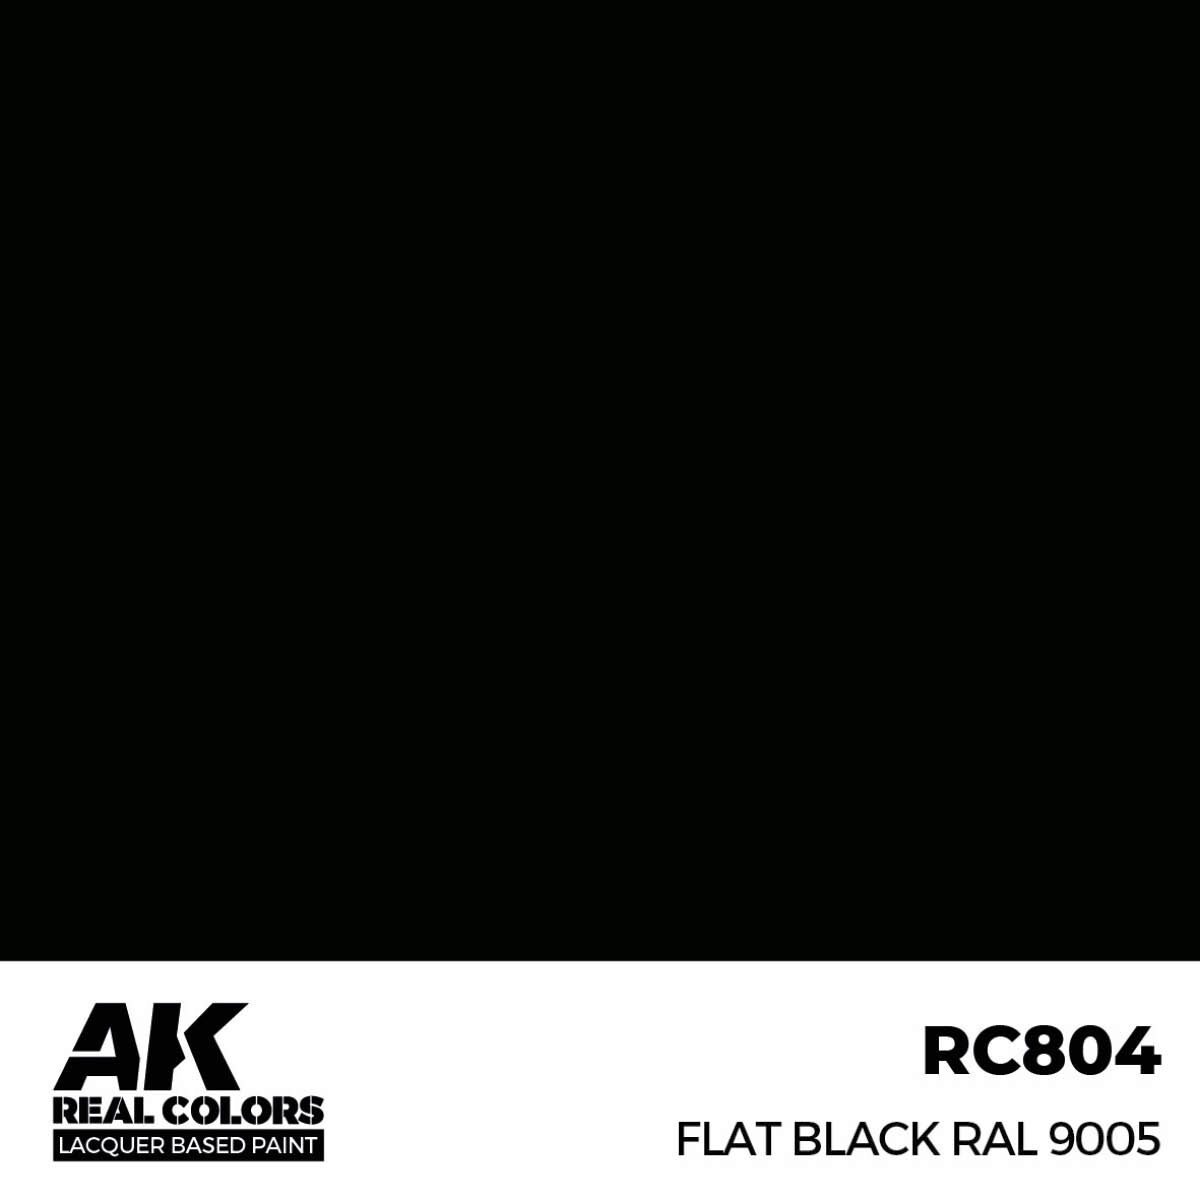 AK RC804 Real Colors Flat Black RAL 9005 17 ml.